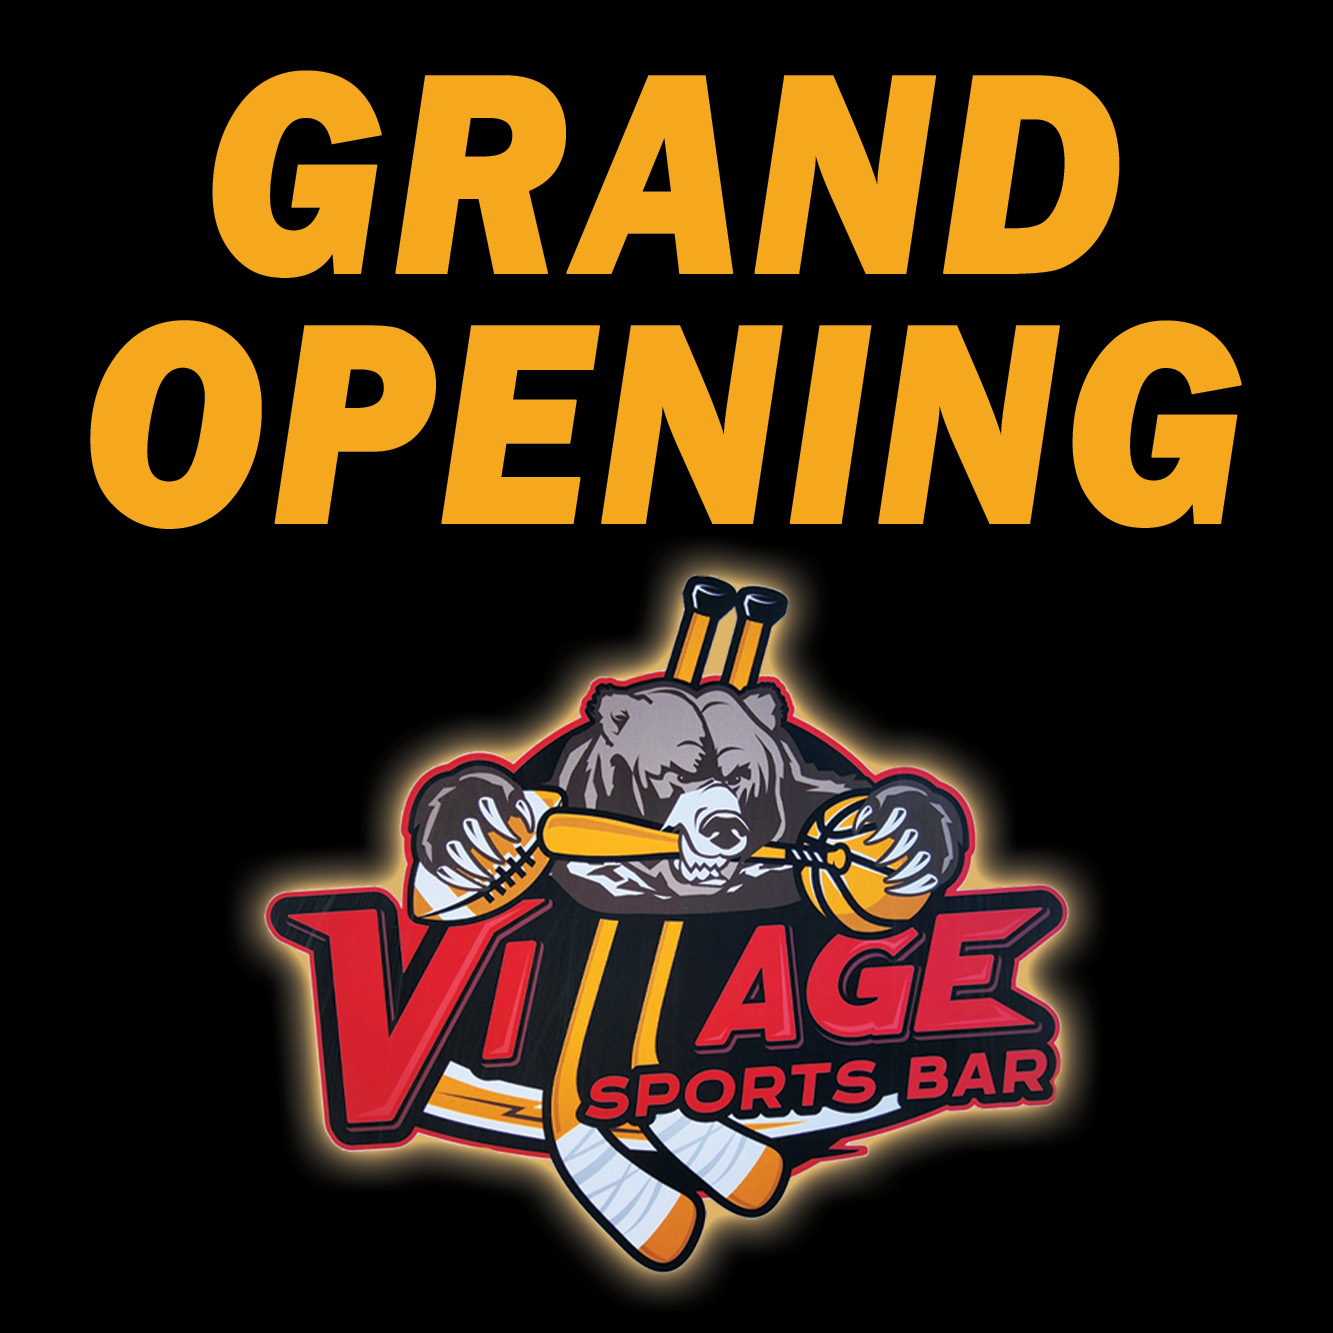 Village Sports Bar Grand Opening